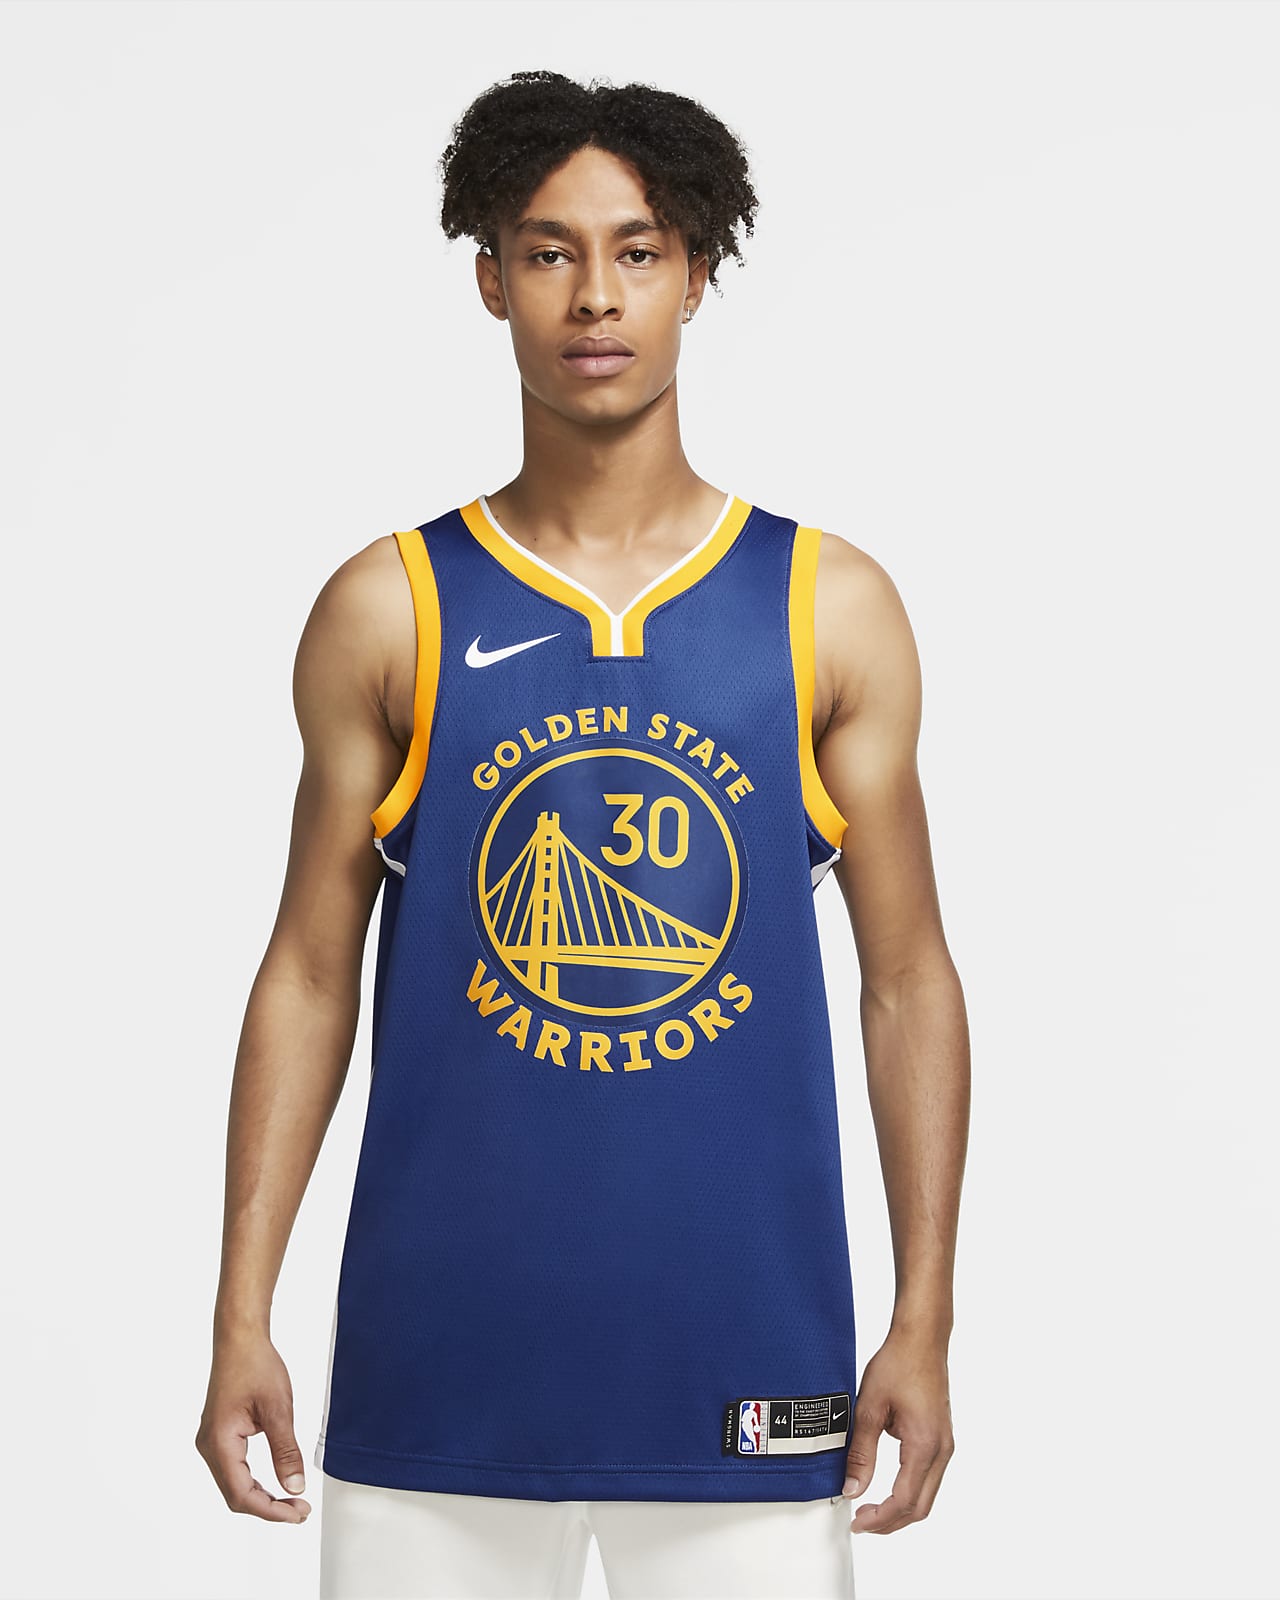 Stephen Curry Warriors Icon Edition 2020 Nike NBA Swingman Trikot